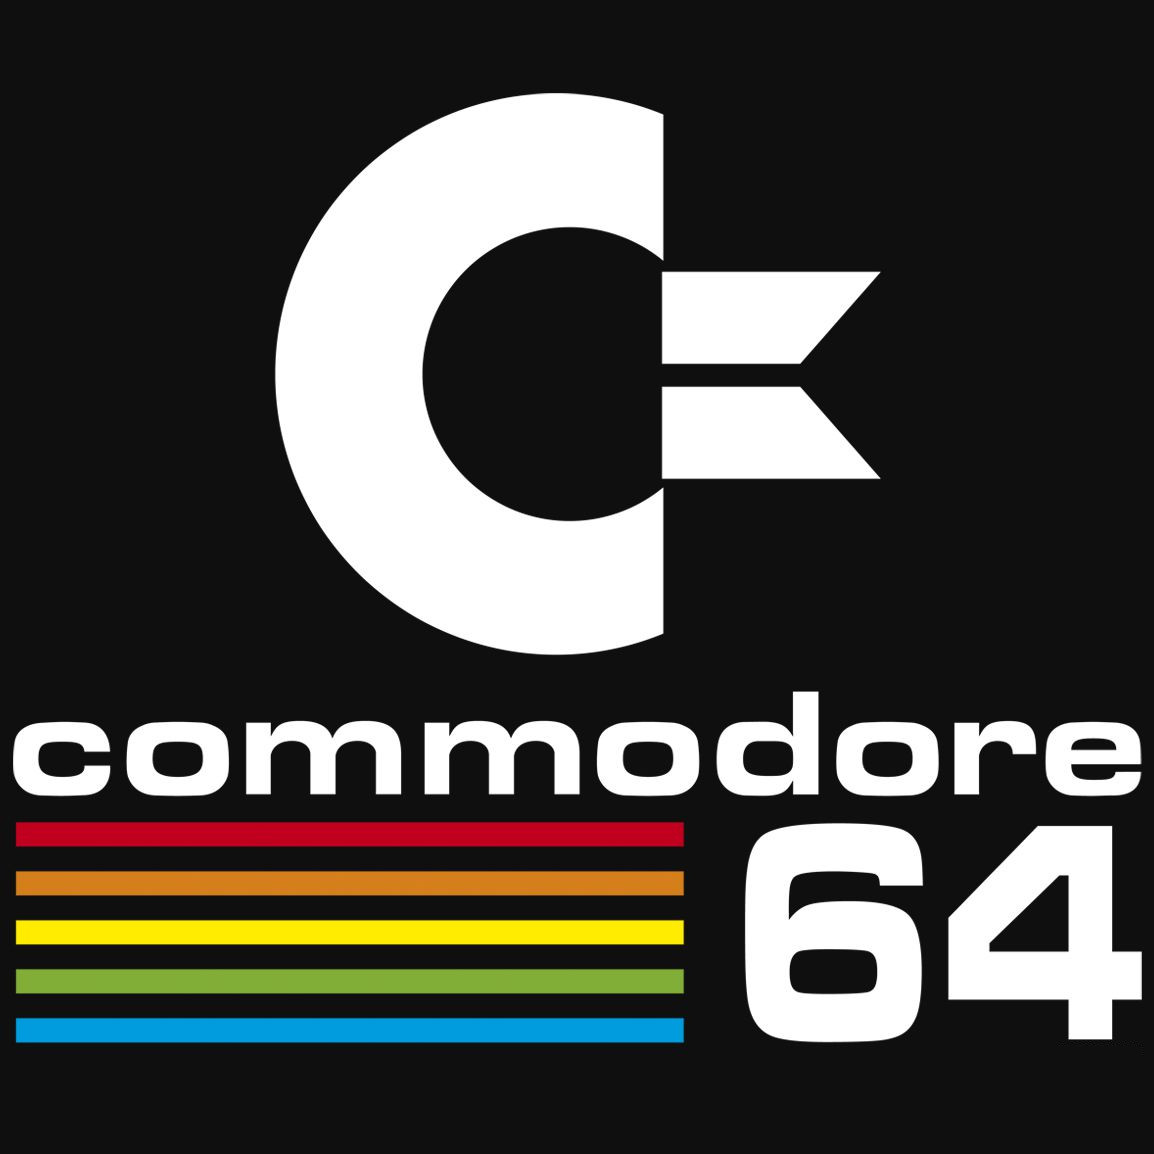 commodore 64 logo on black